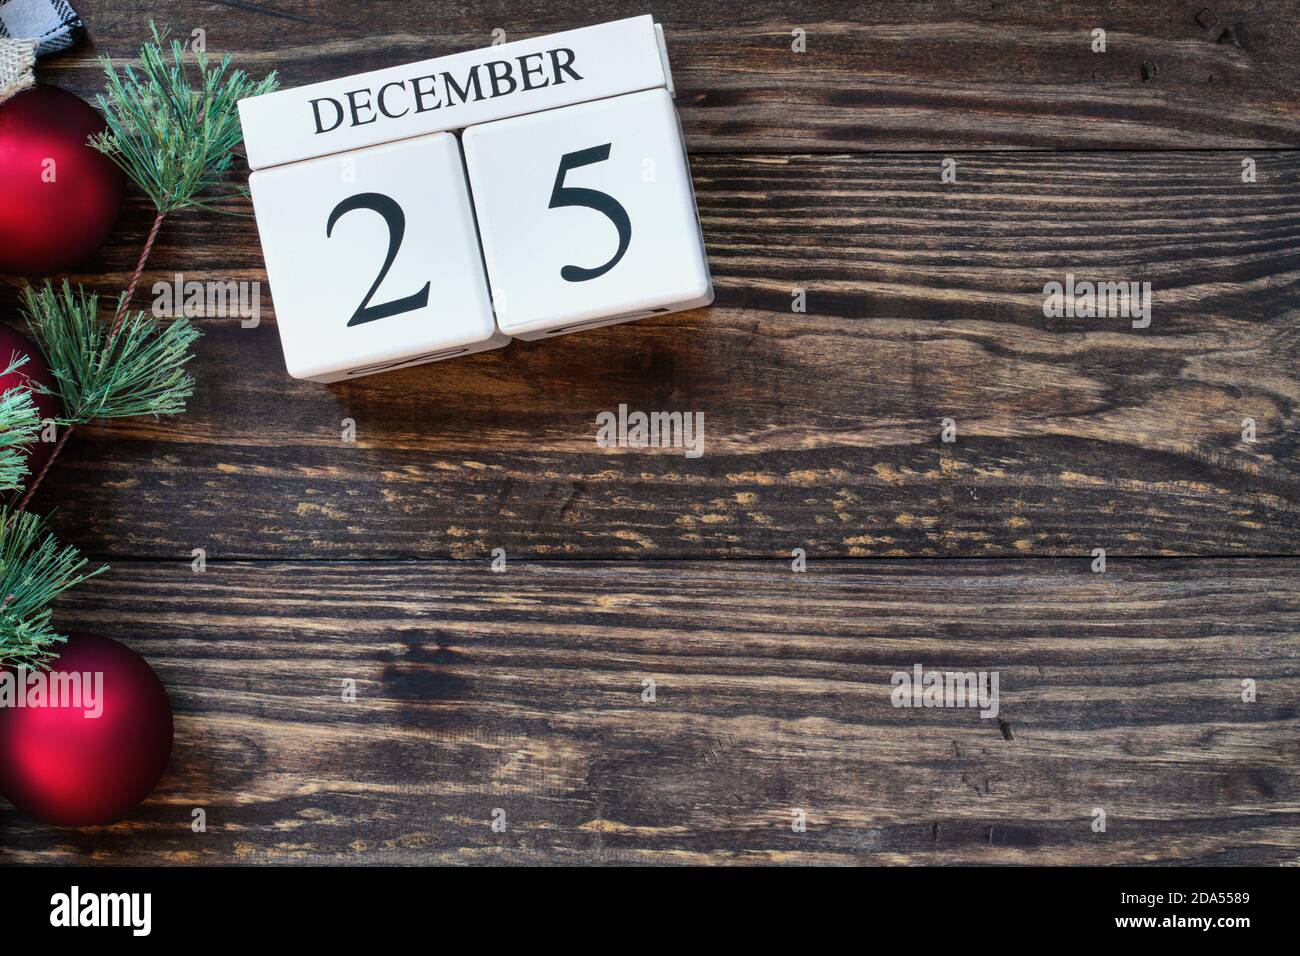 25 de diciembre fotografías e imágenes de alta resolución - Alamy